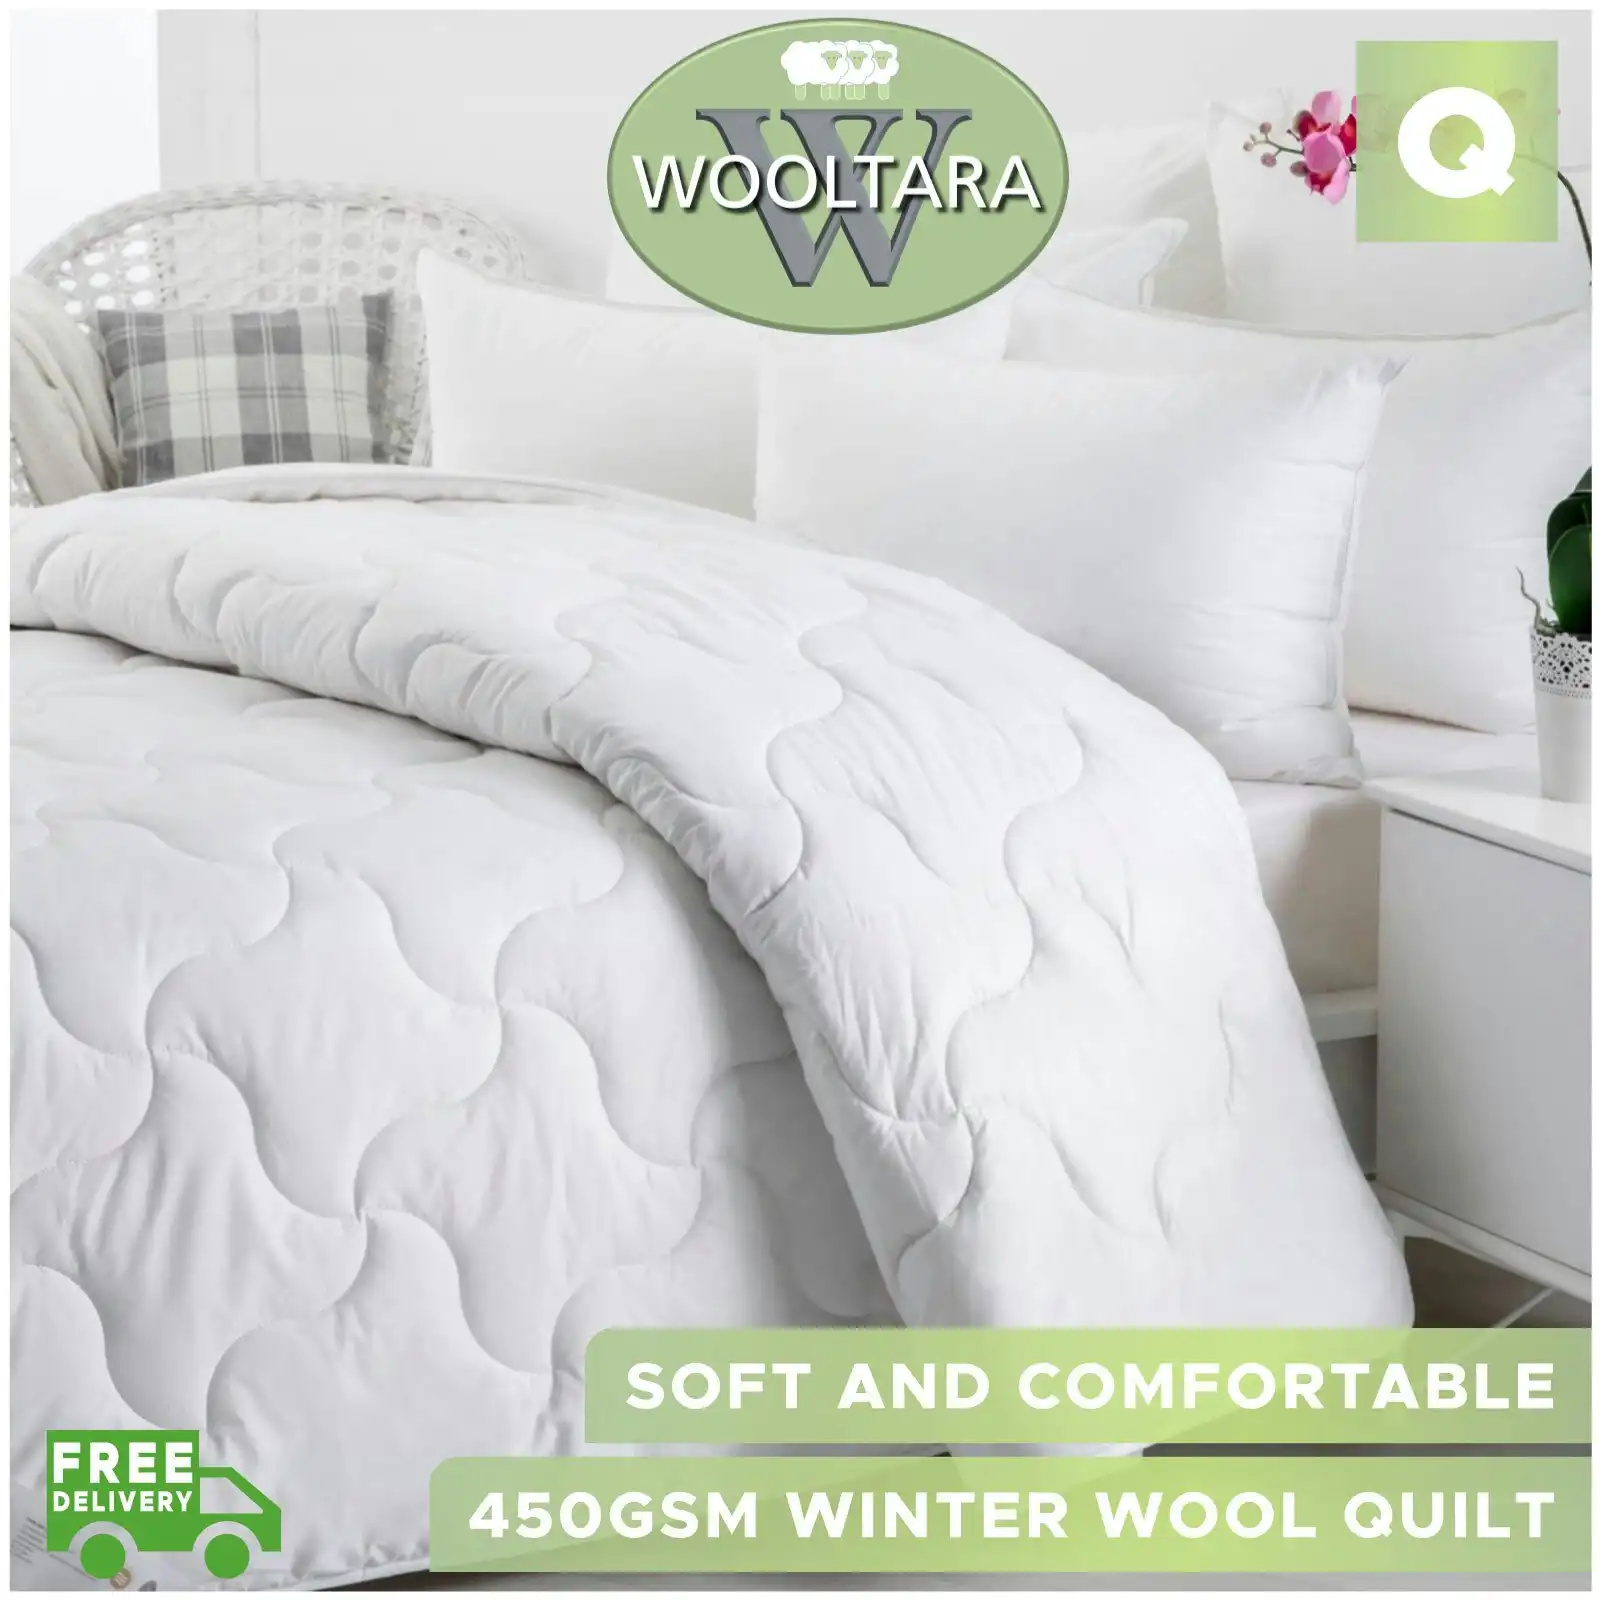 Wooltara Imperial Luxury 450GSM Washable Winter Australia Wool Quilt - Queen Bed